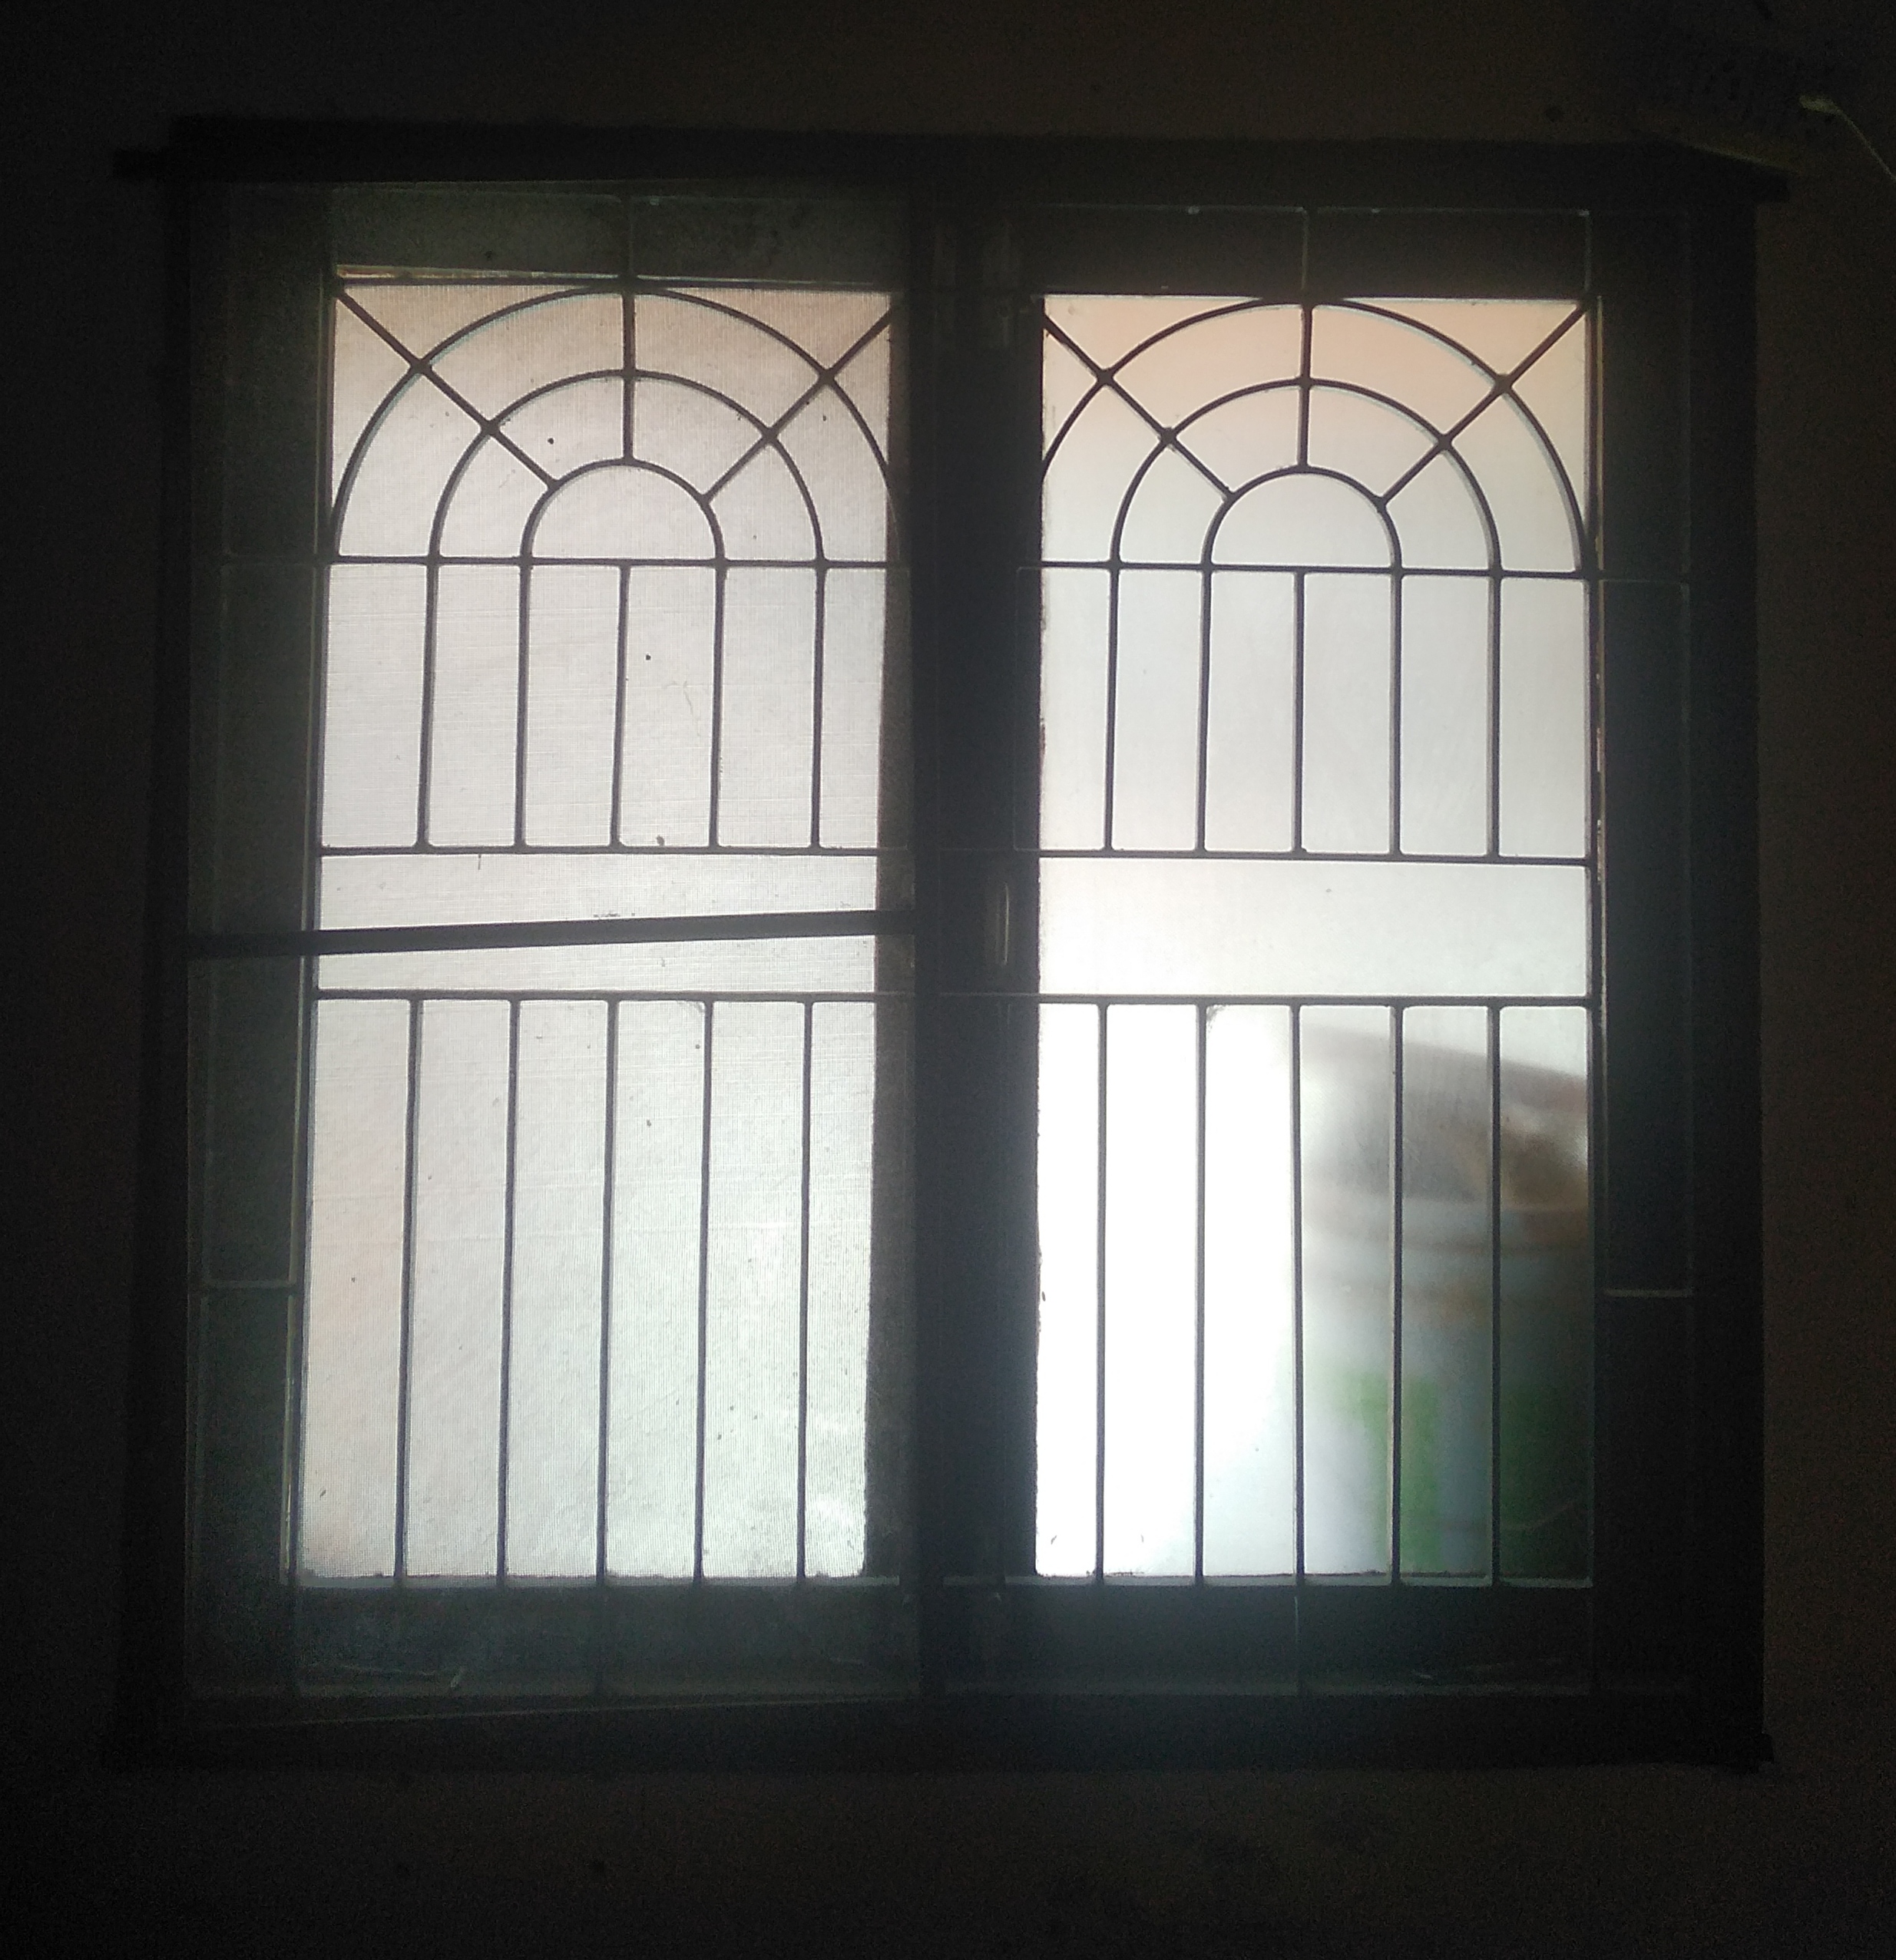 House window